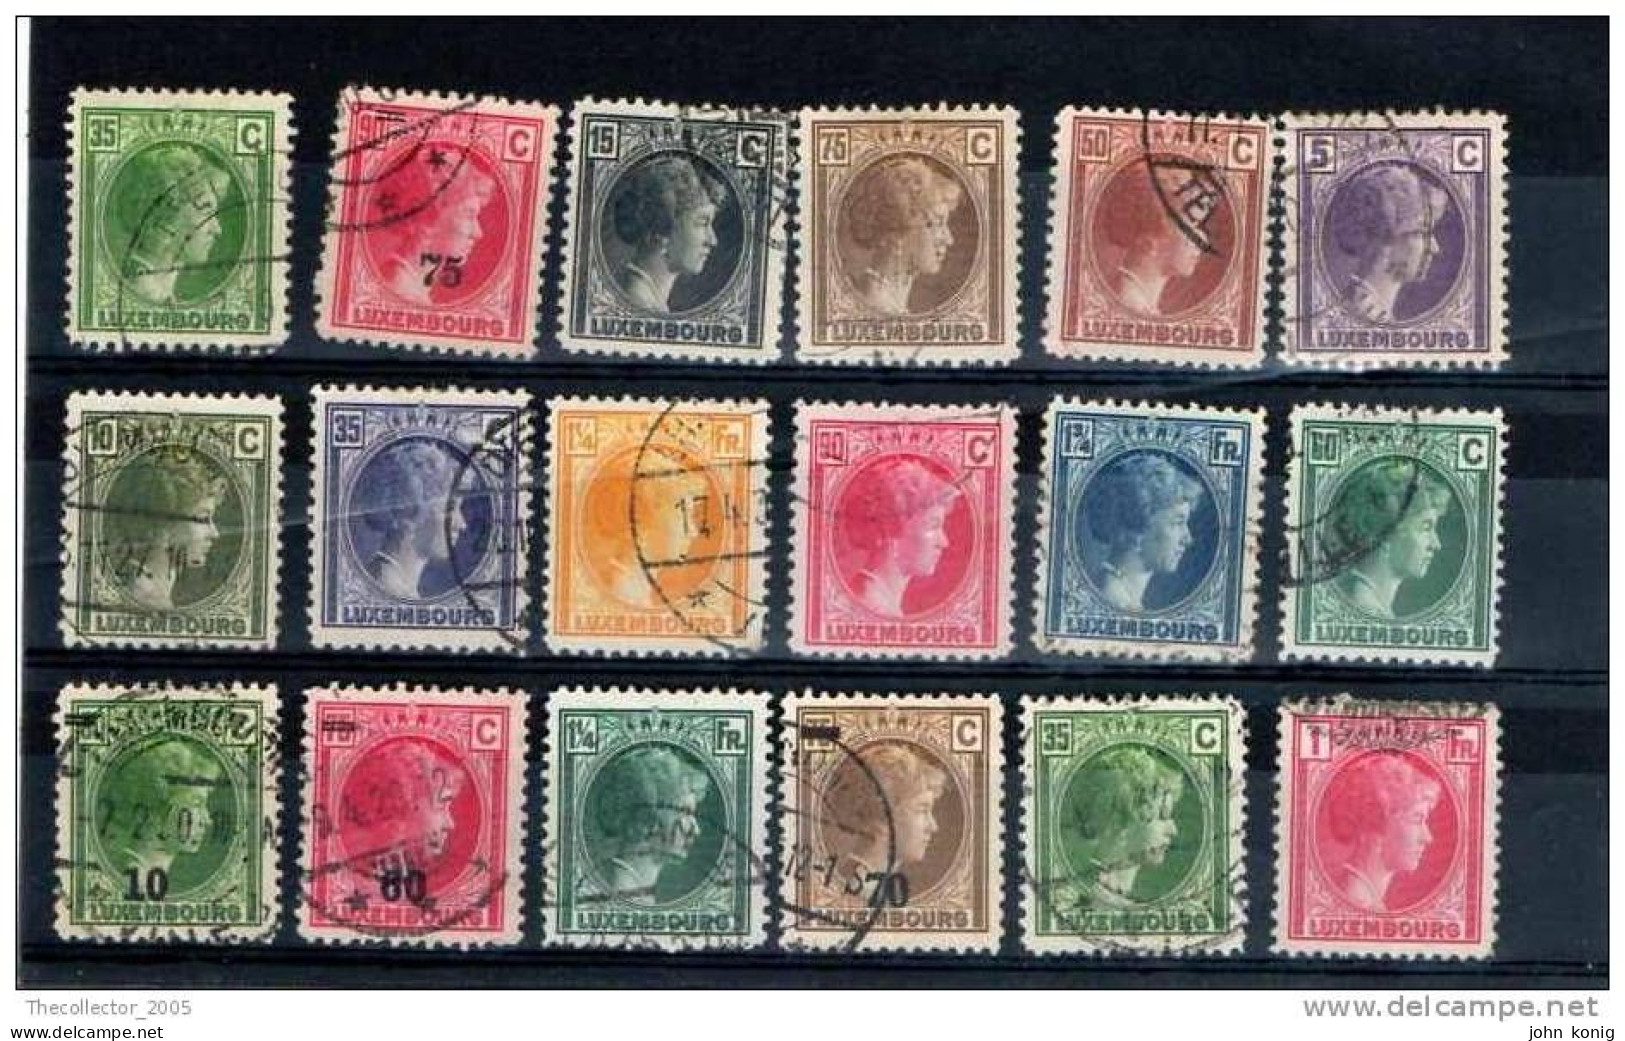 Luxembourg - Lussemburgo - Stamps Lot Used - Gestempeld - Francobolli Lotto Usati - Colecciones